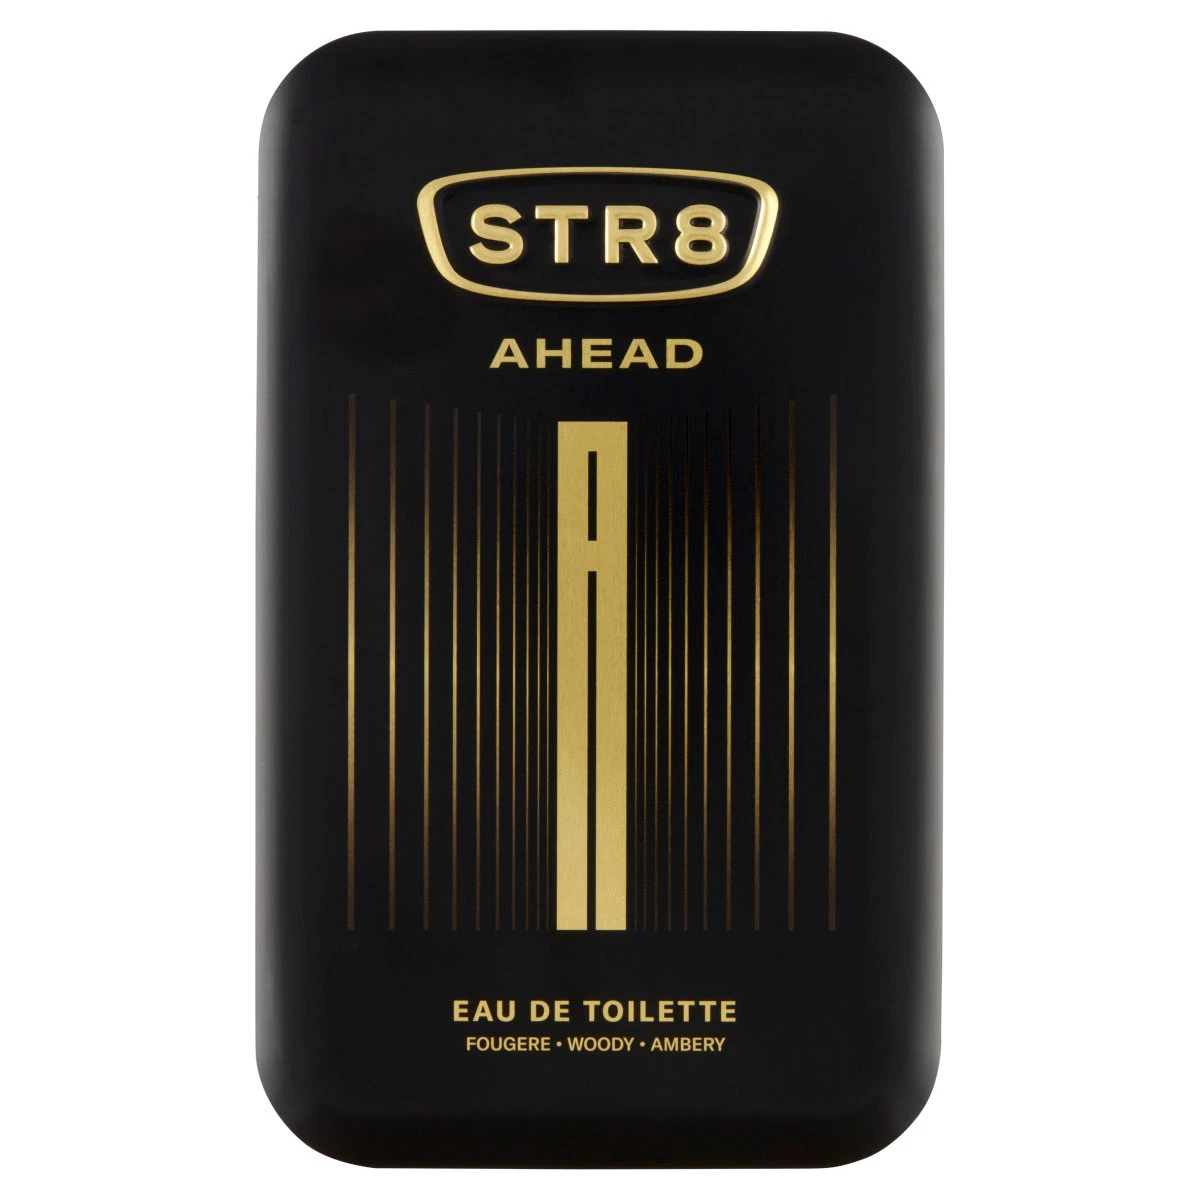 STR8 Ahead eau de toilette 100 ml